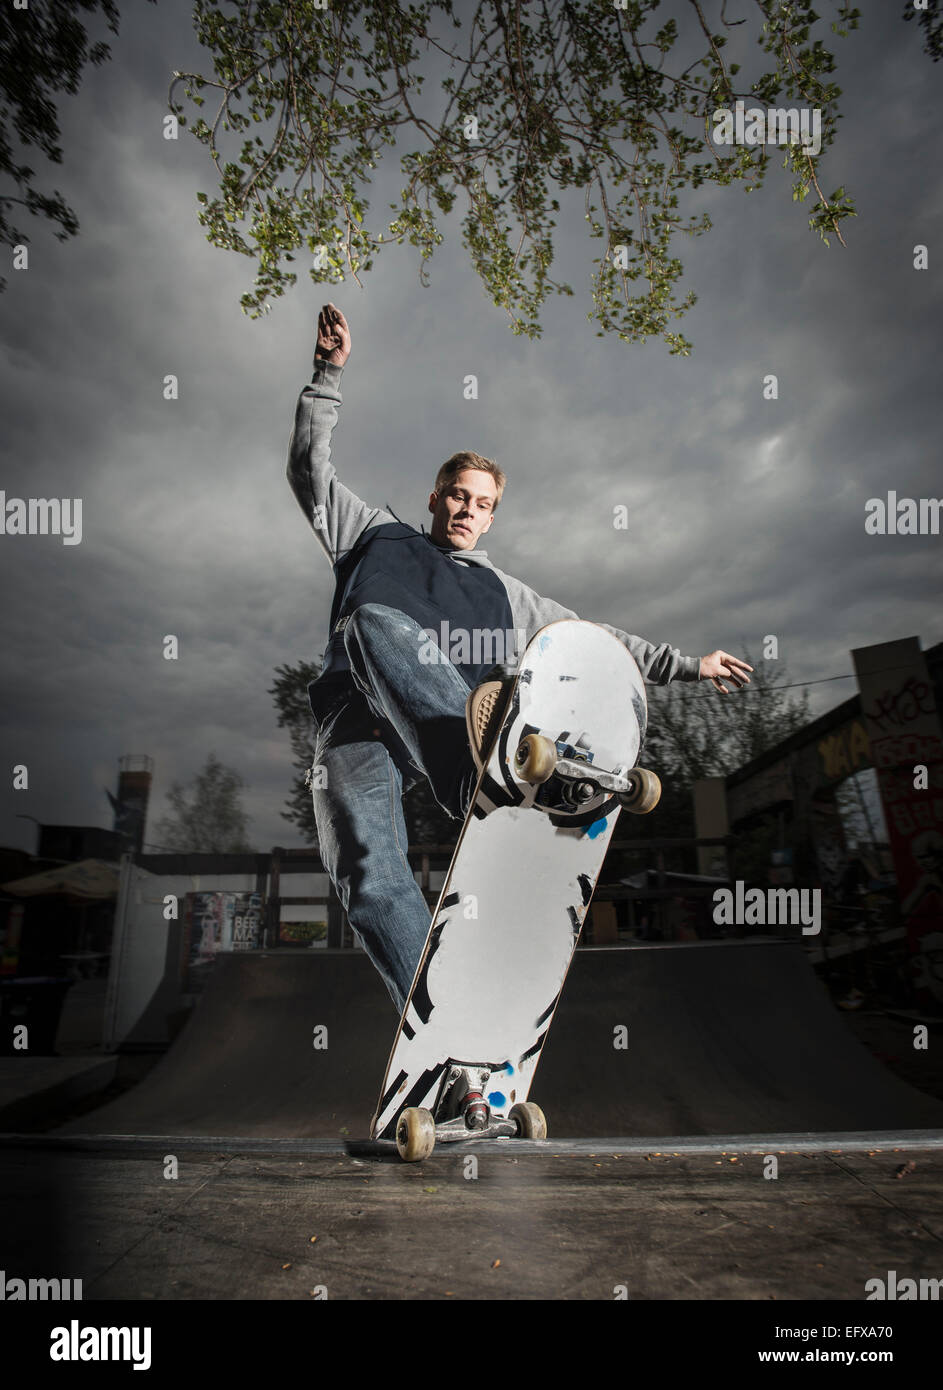 Skateboarding on mini ramp, Salad grind, Berlin, Germany Stock Photo